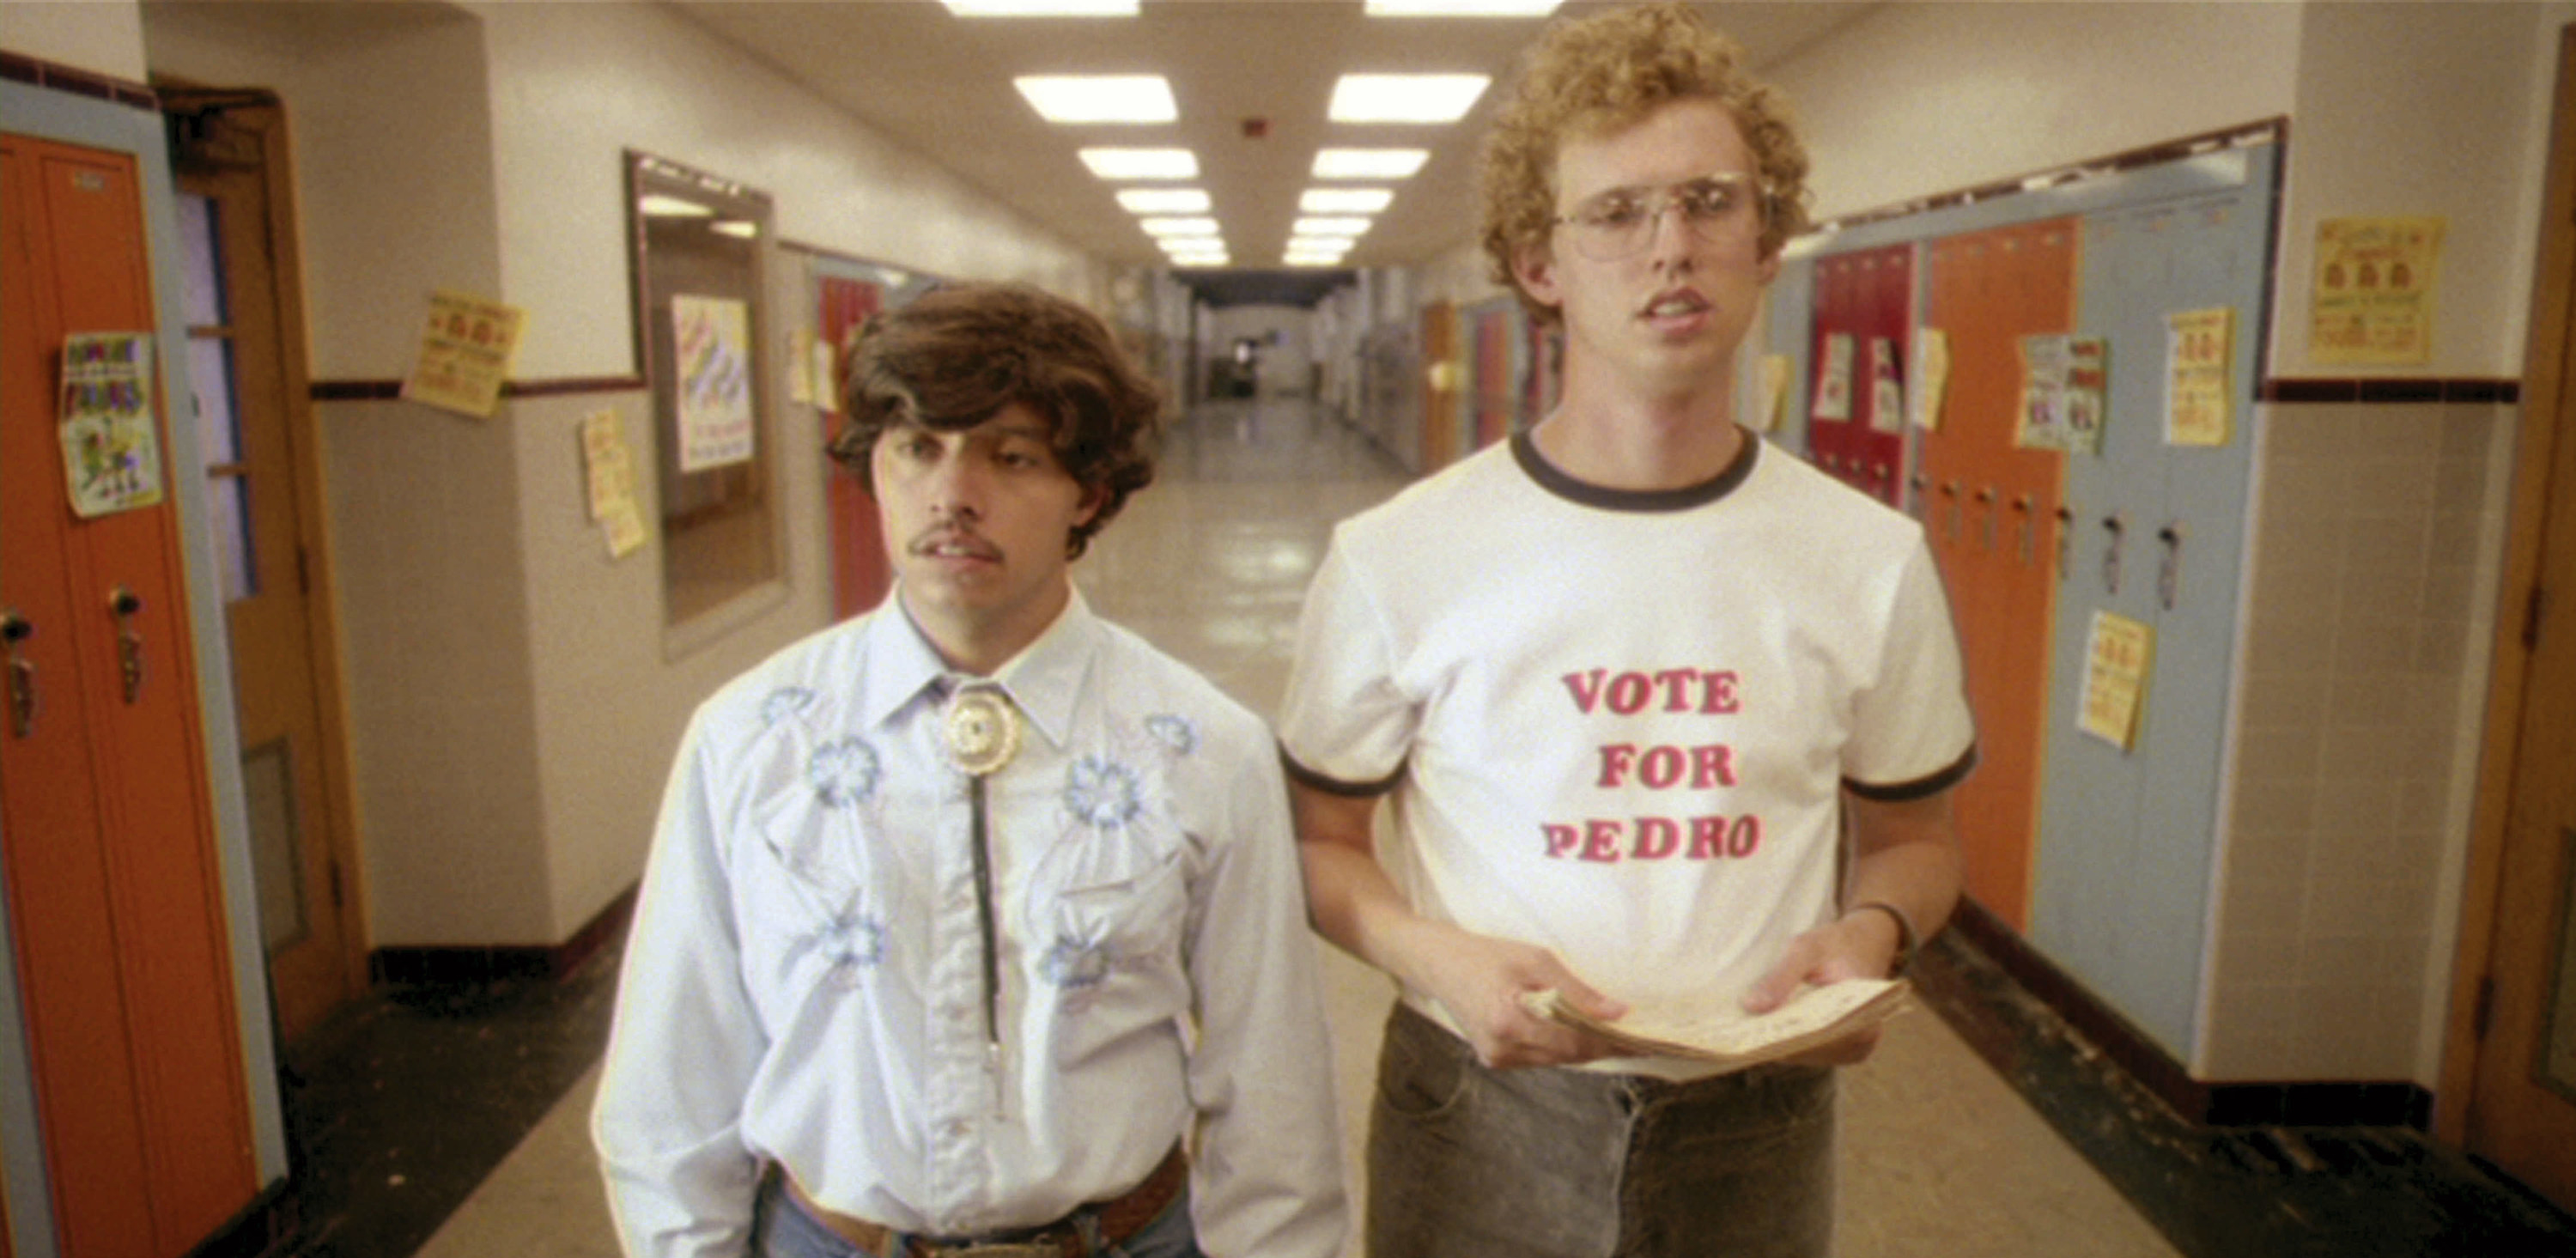 Napoleon and Pedro walking the empty school hallway